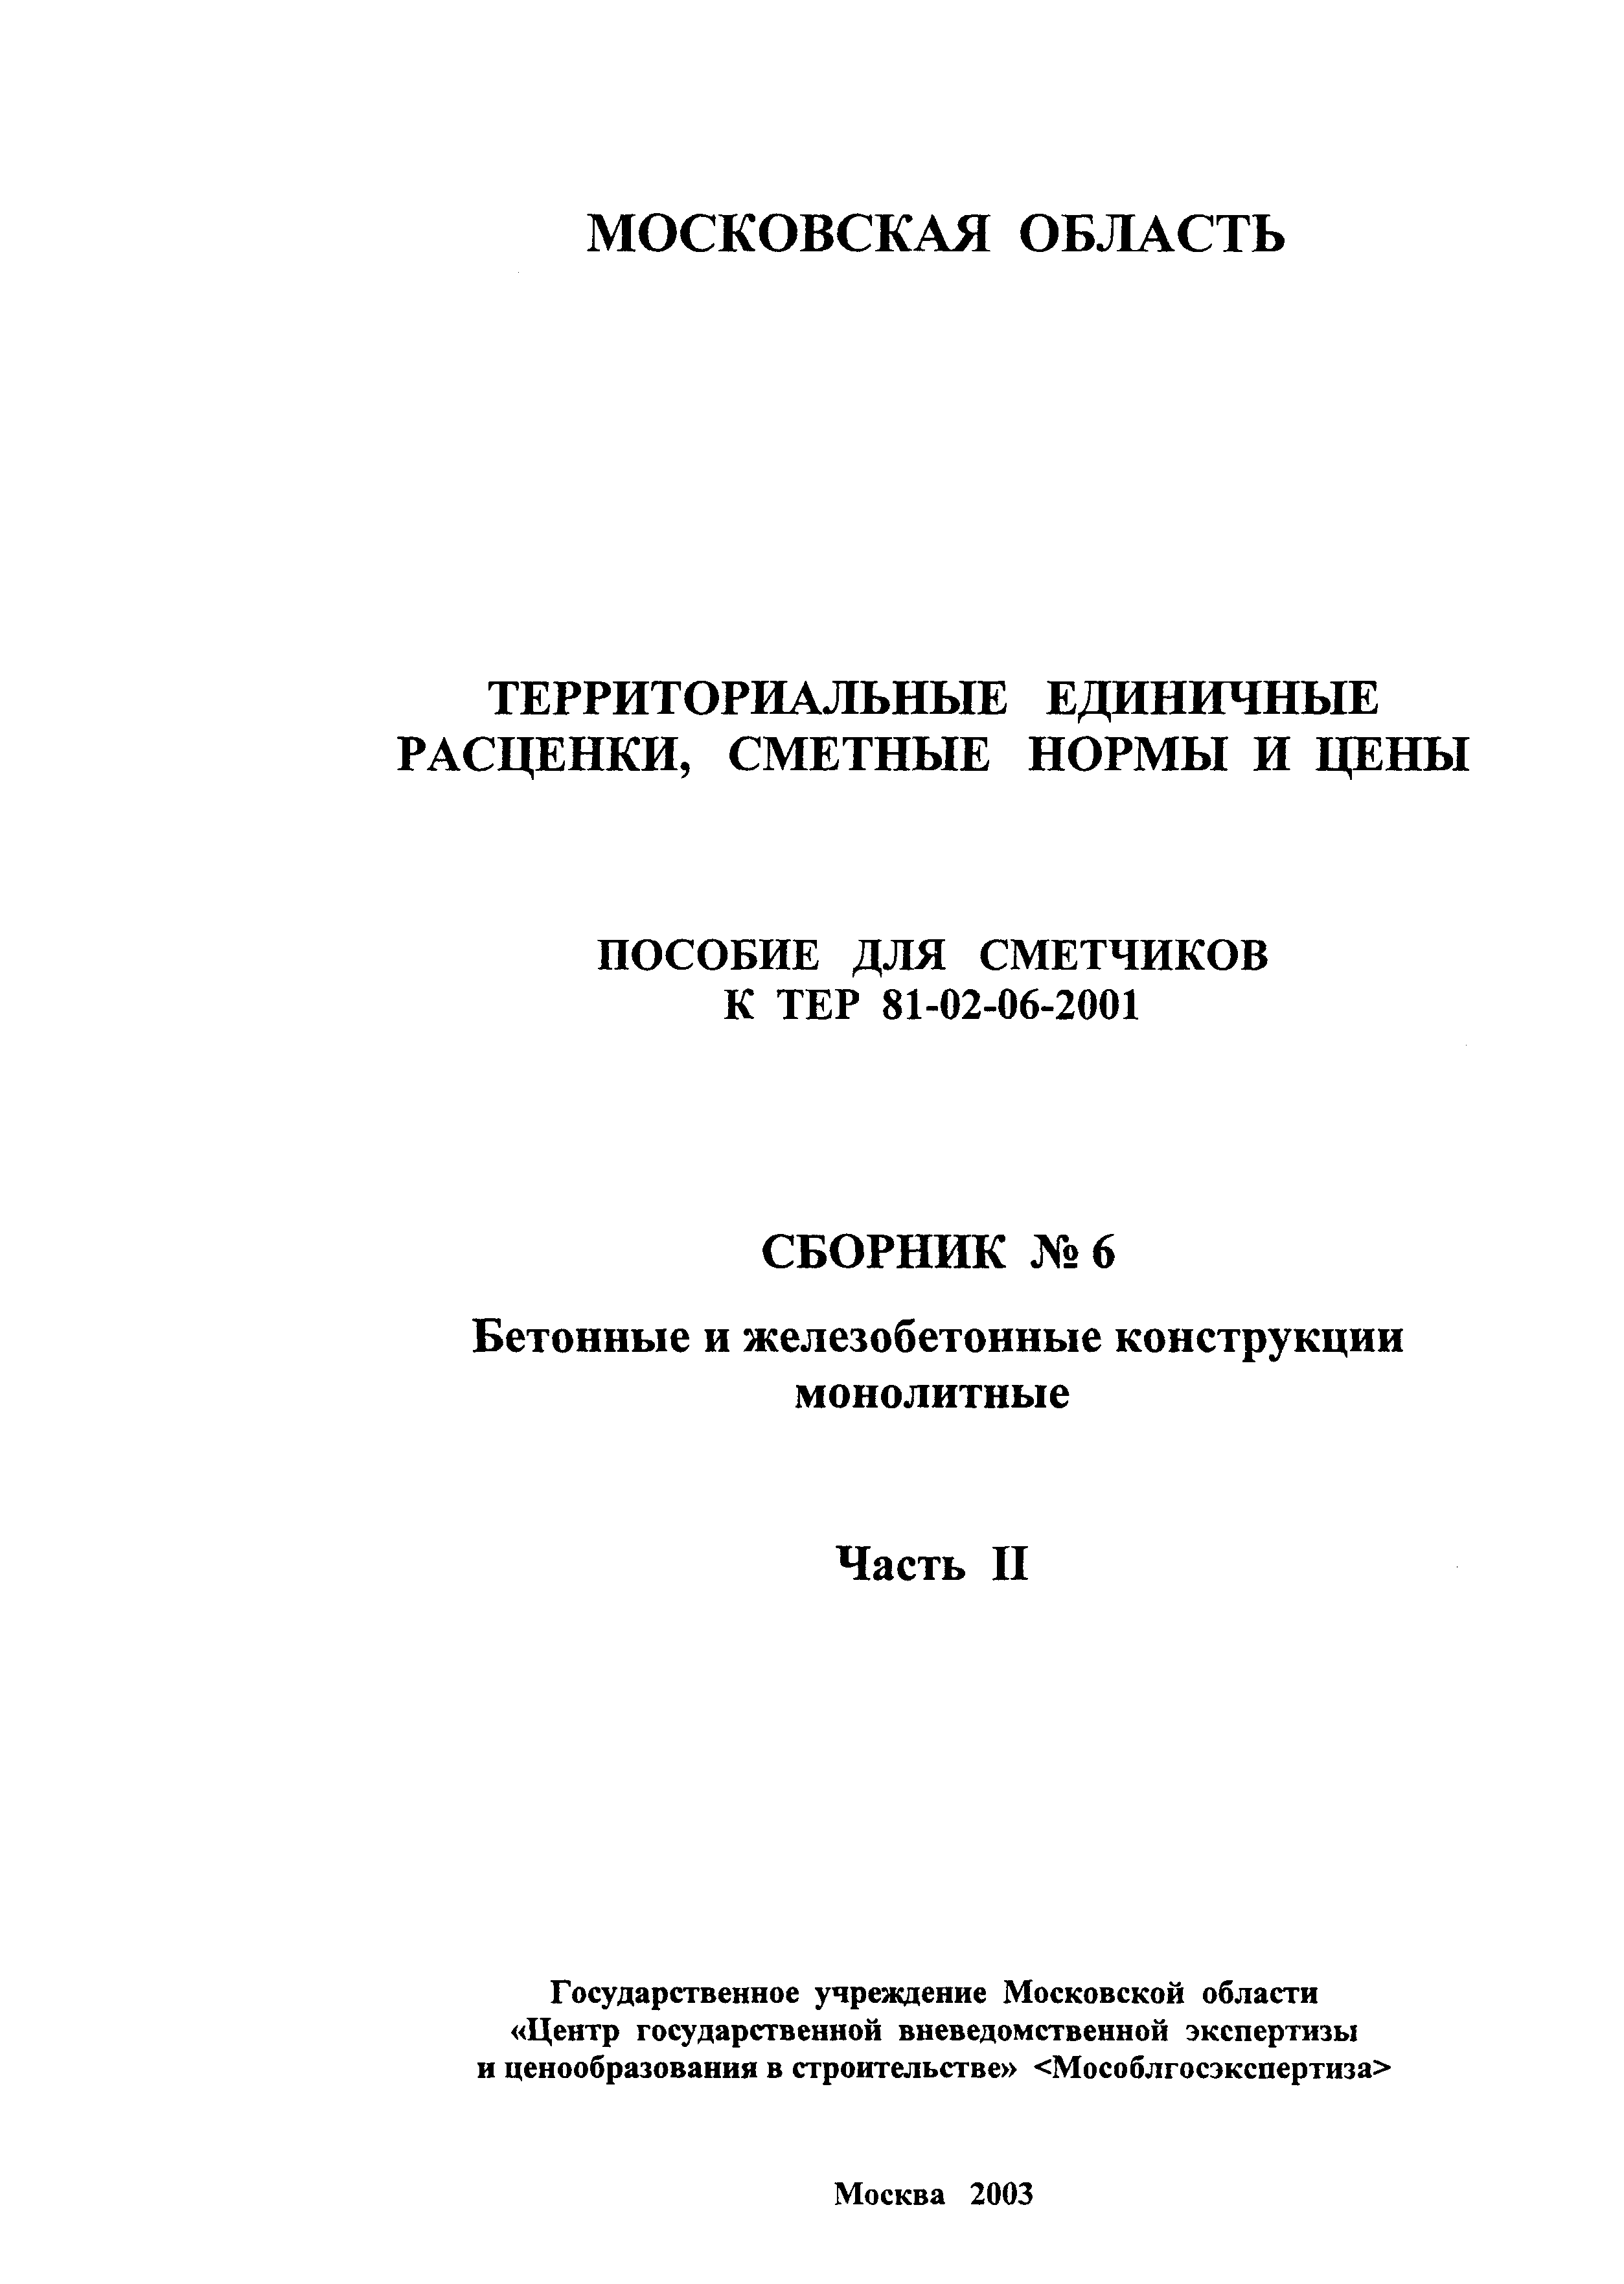 ГЭСНПиТЕР 2001-06 (II)